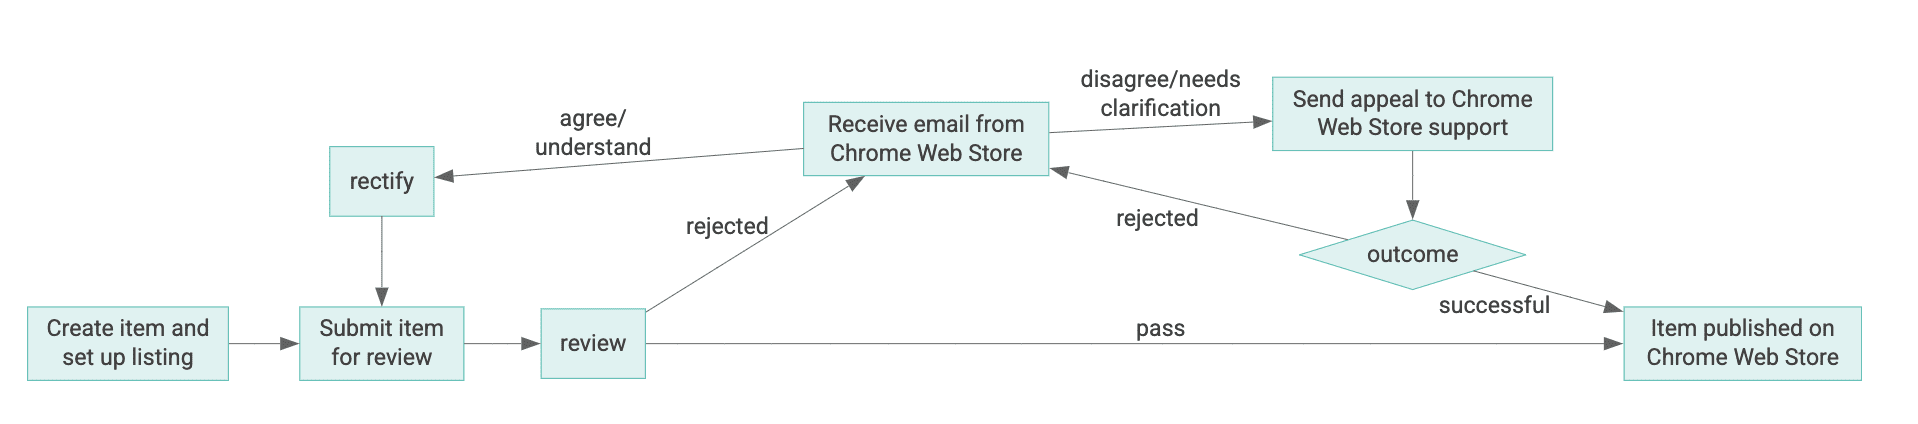 Diagram siklus proses item Chrome Web Store